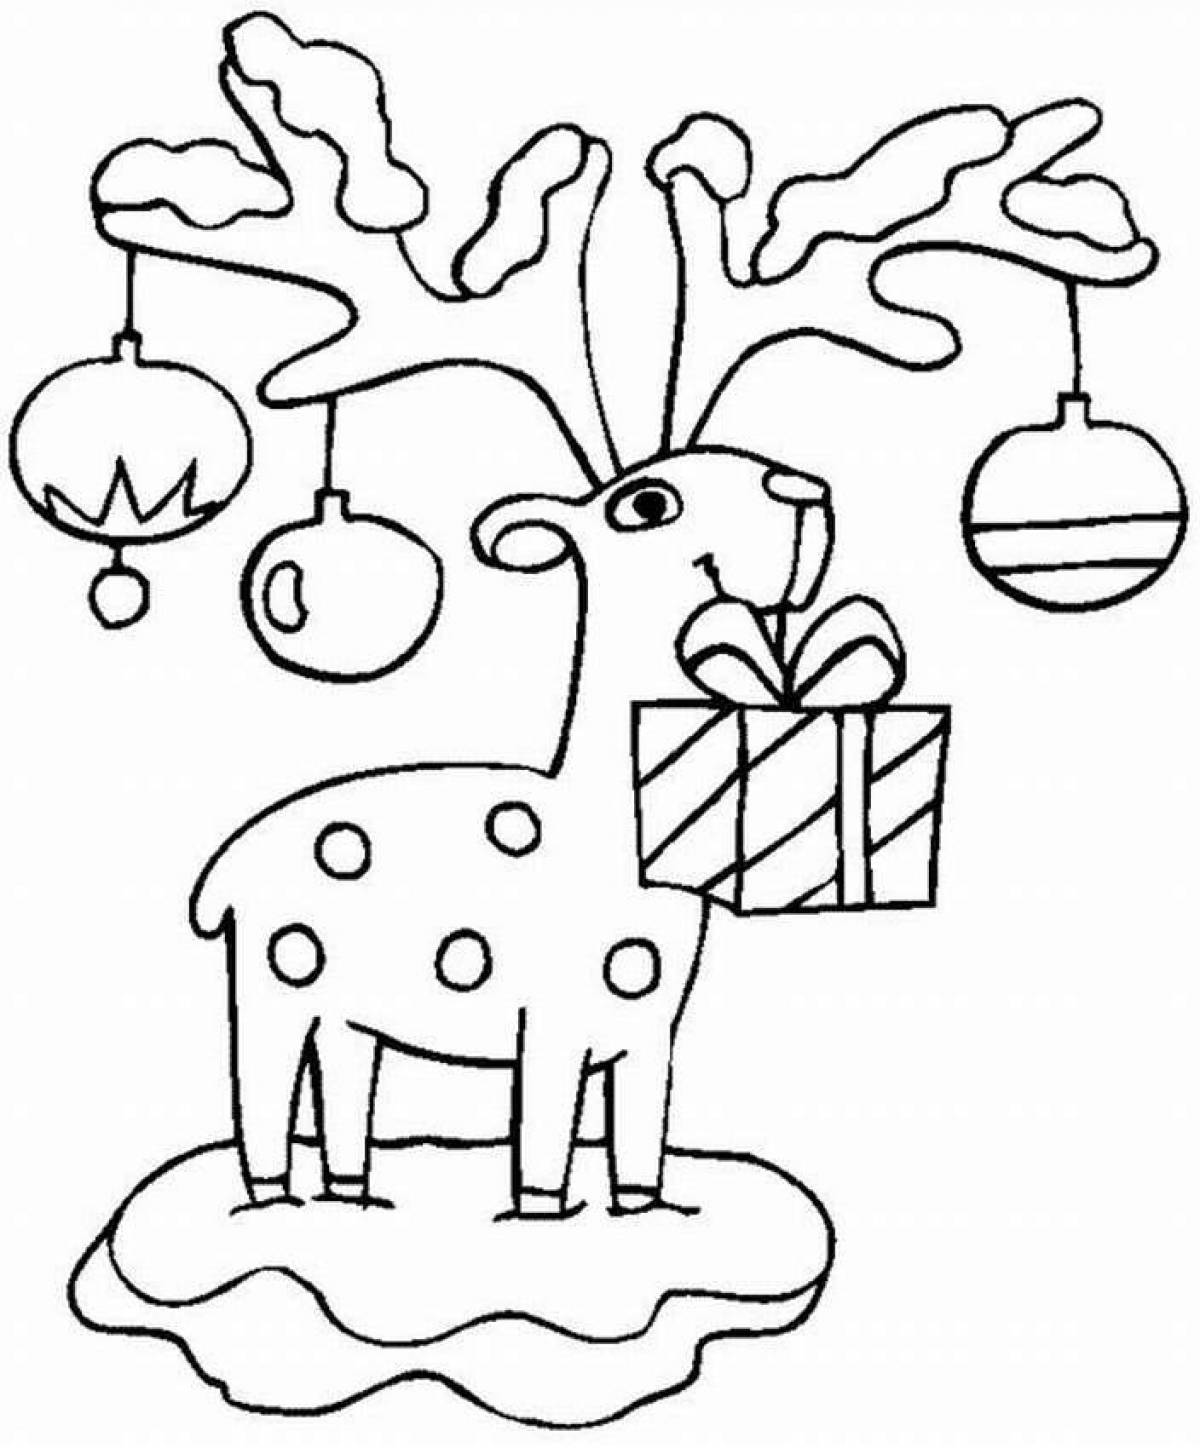 Exquisite Christmas Reindeer coloring book